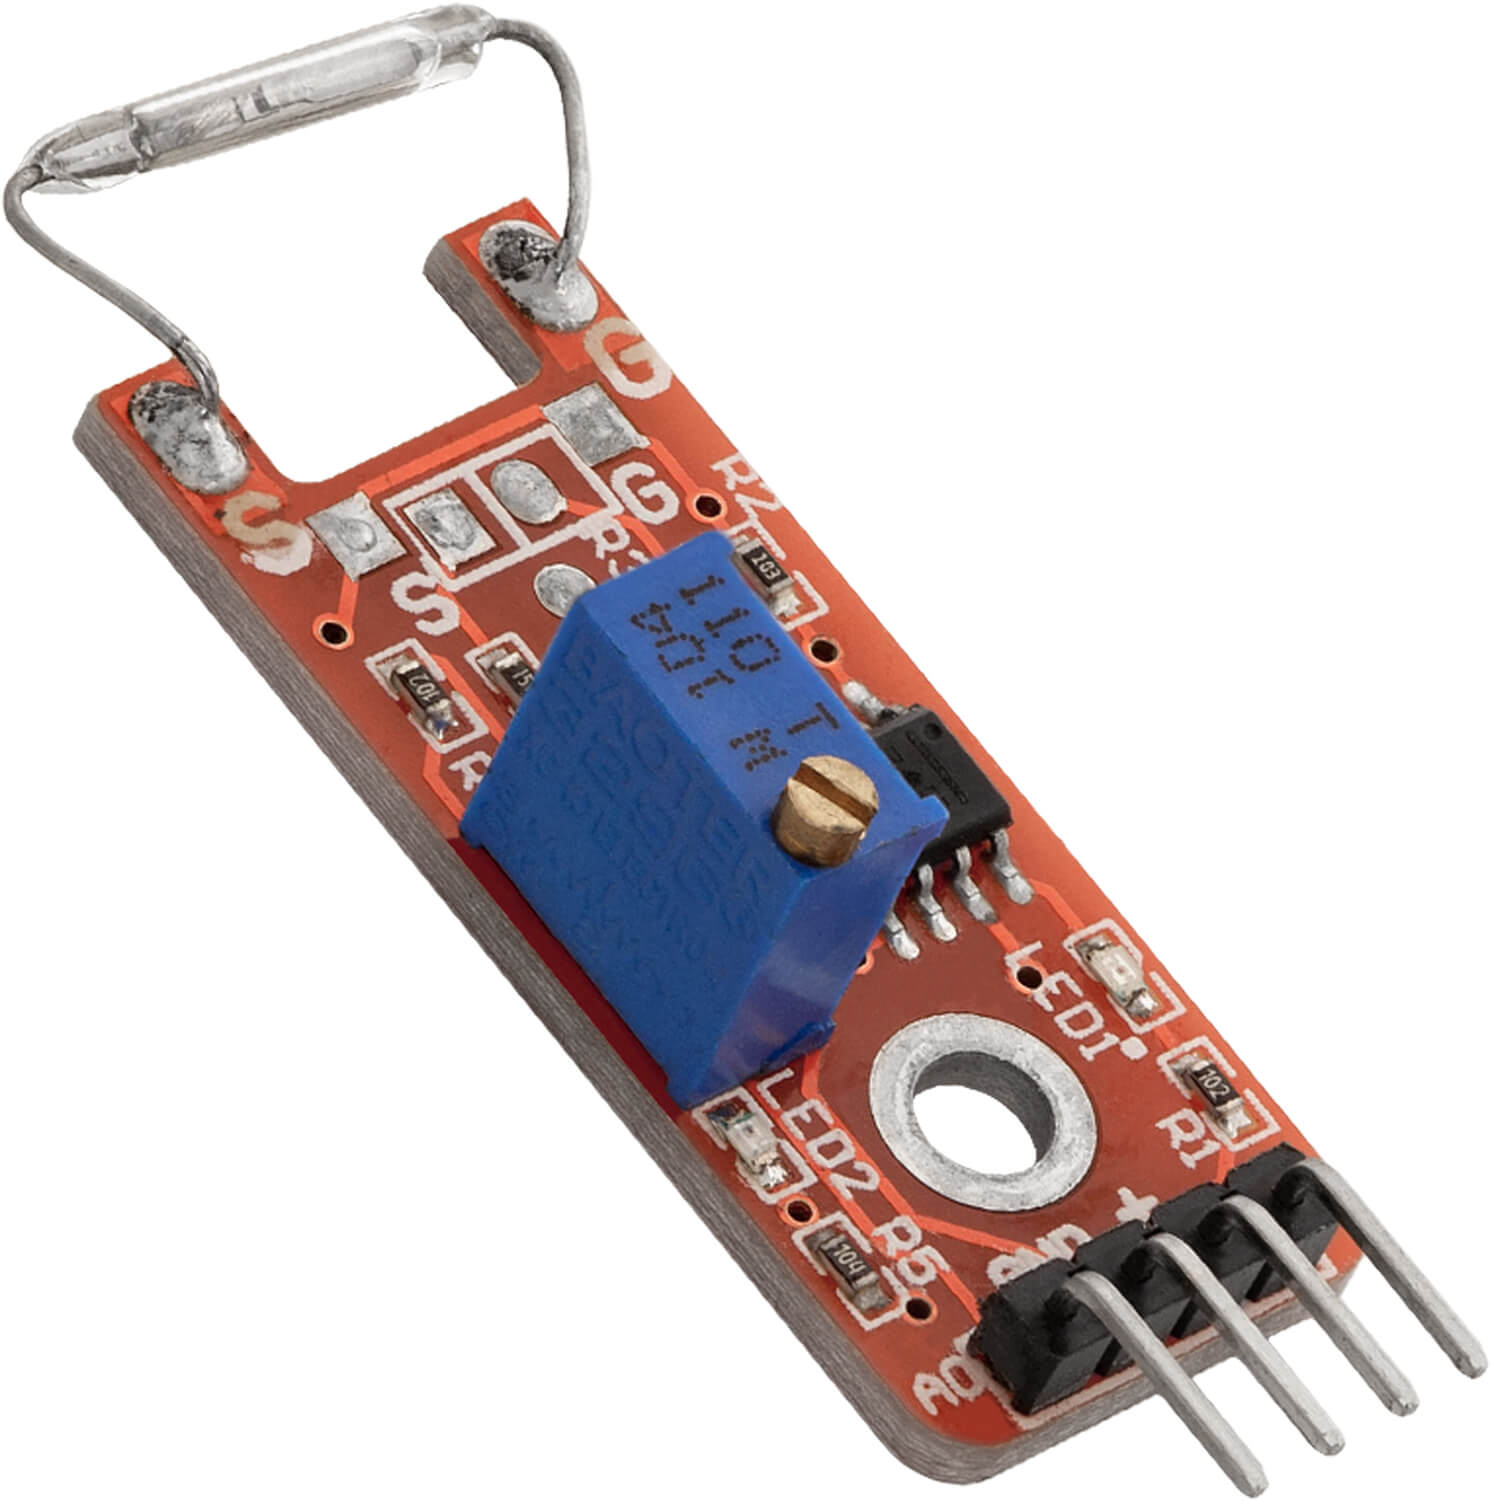 KY-021 Magnet Switch Mini Magnet Reed Module Sensor